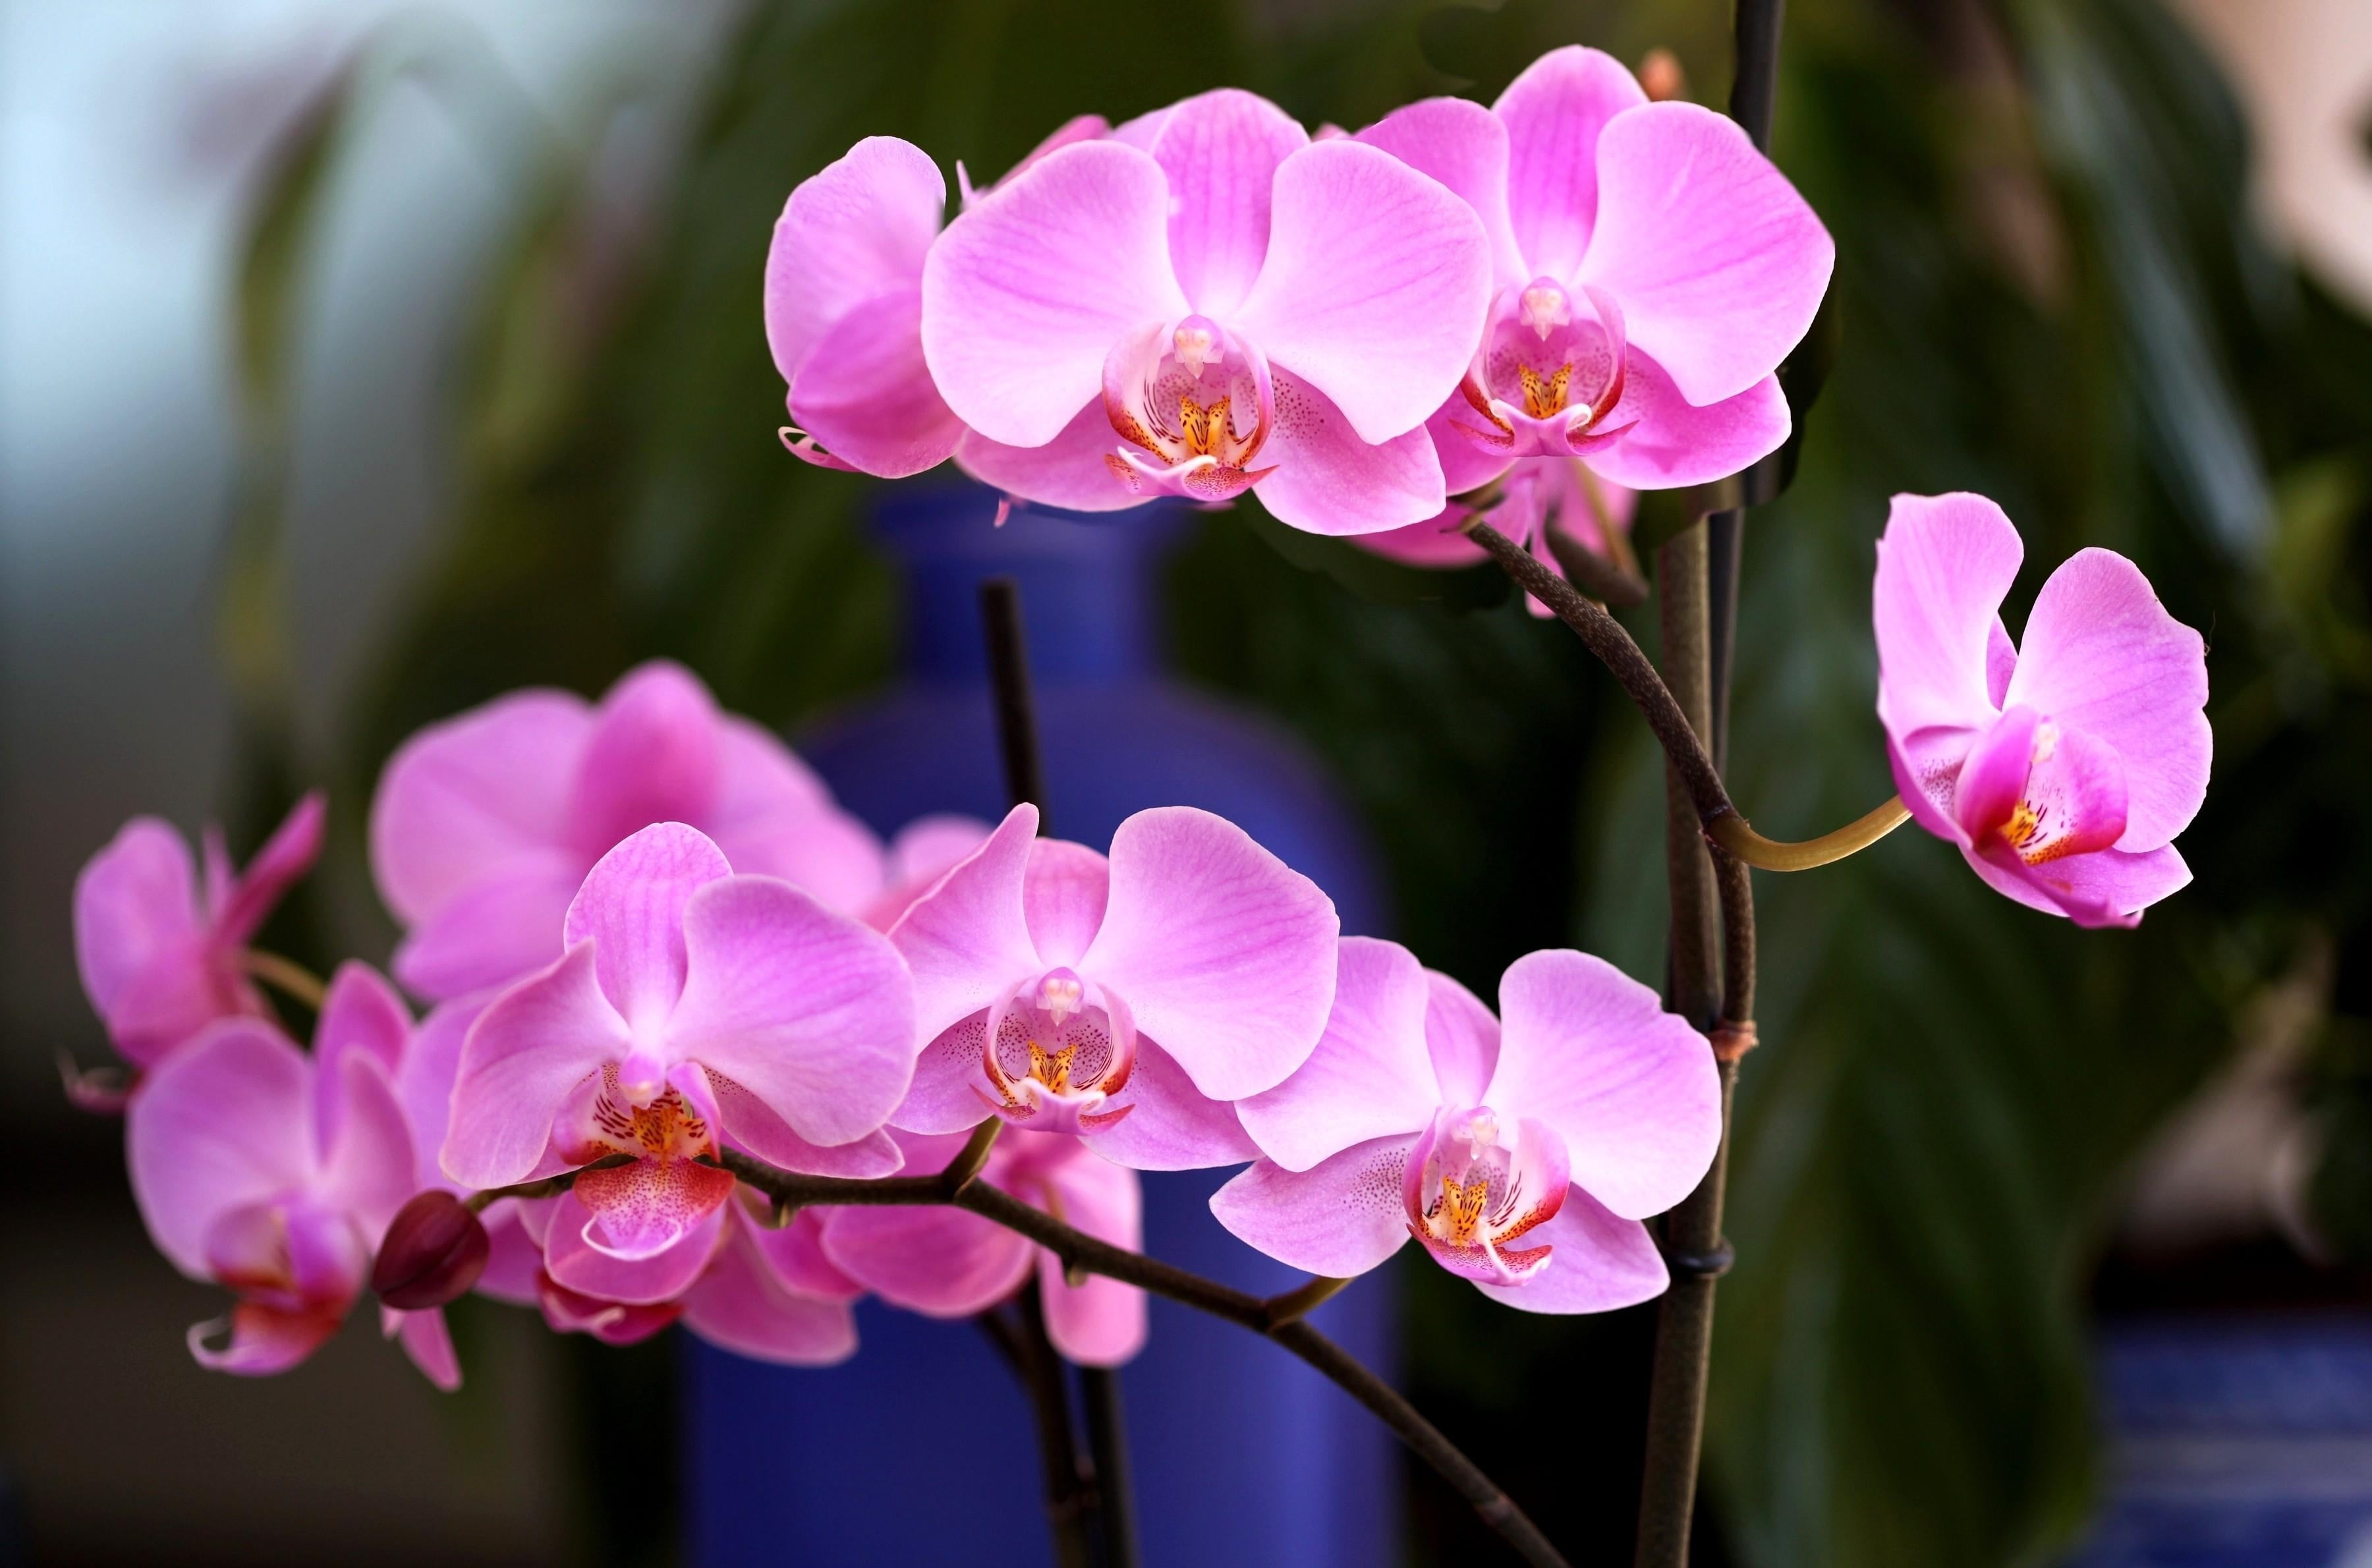 Orchid - Flowers Photo (28139195) - Fanpop